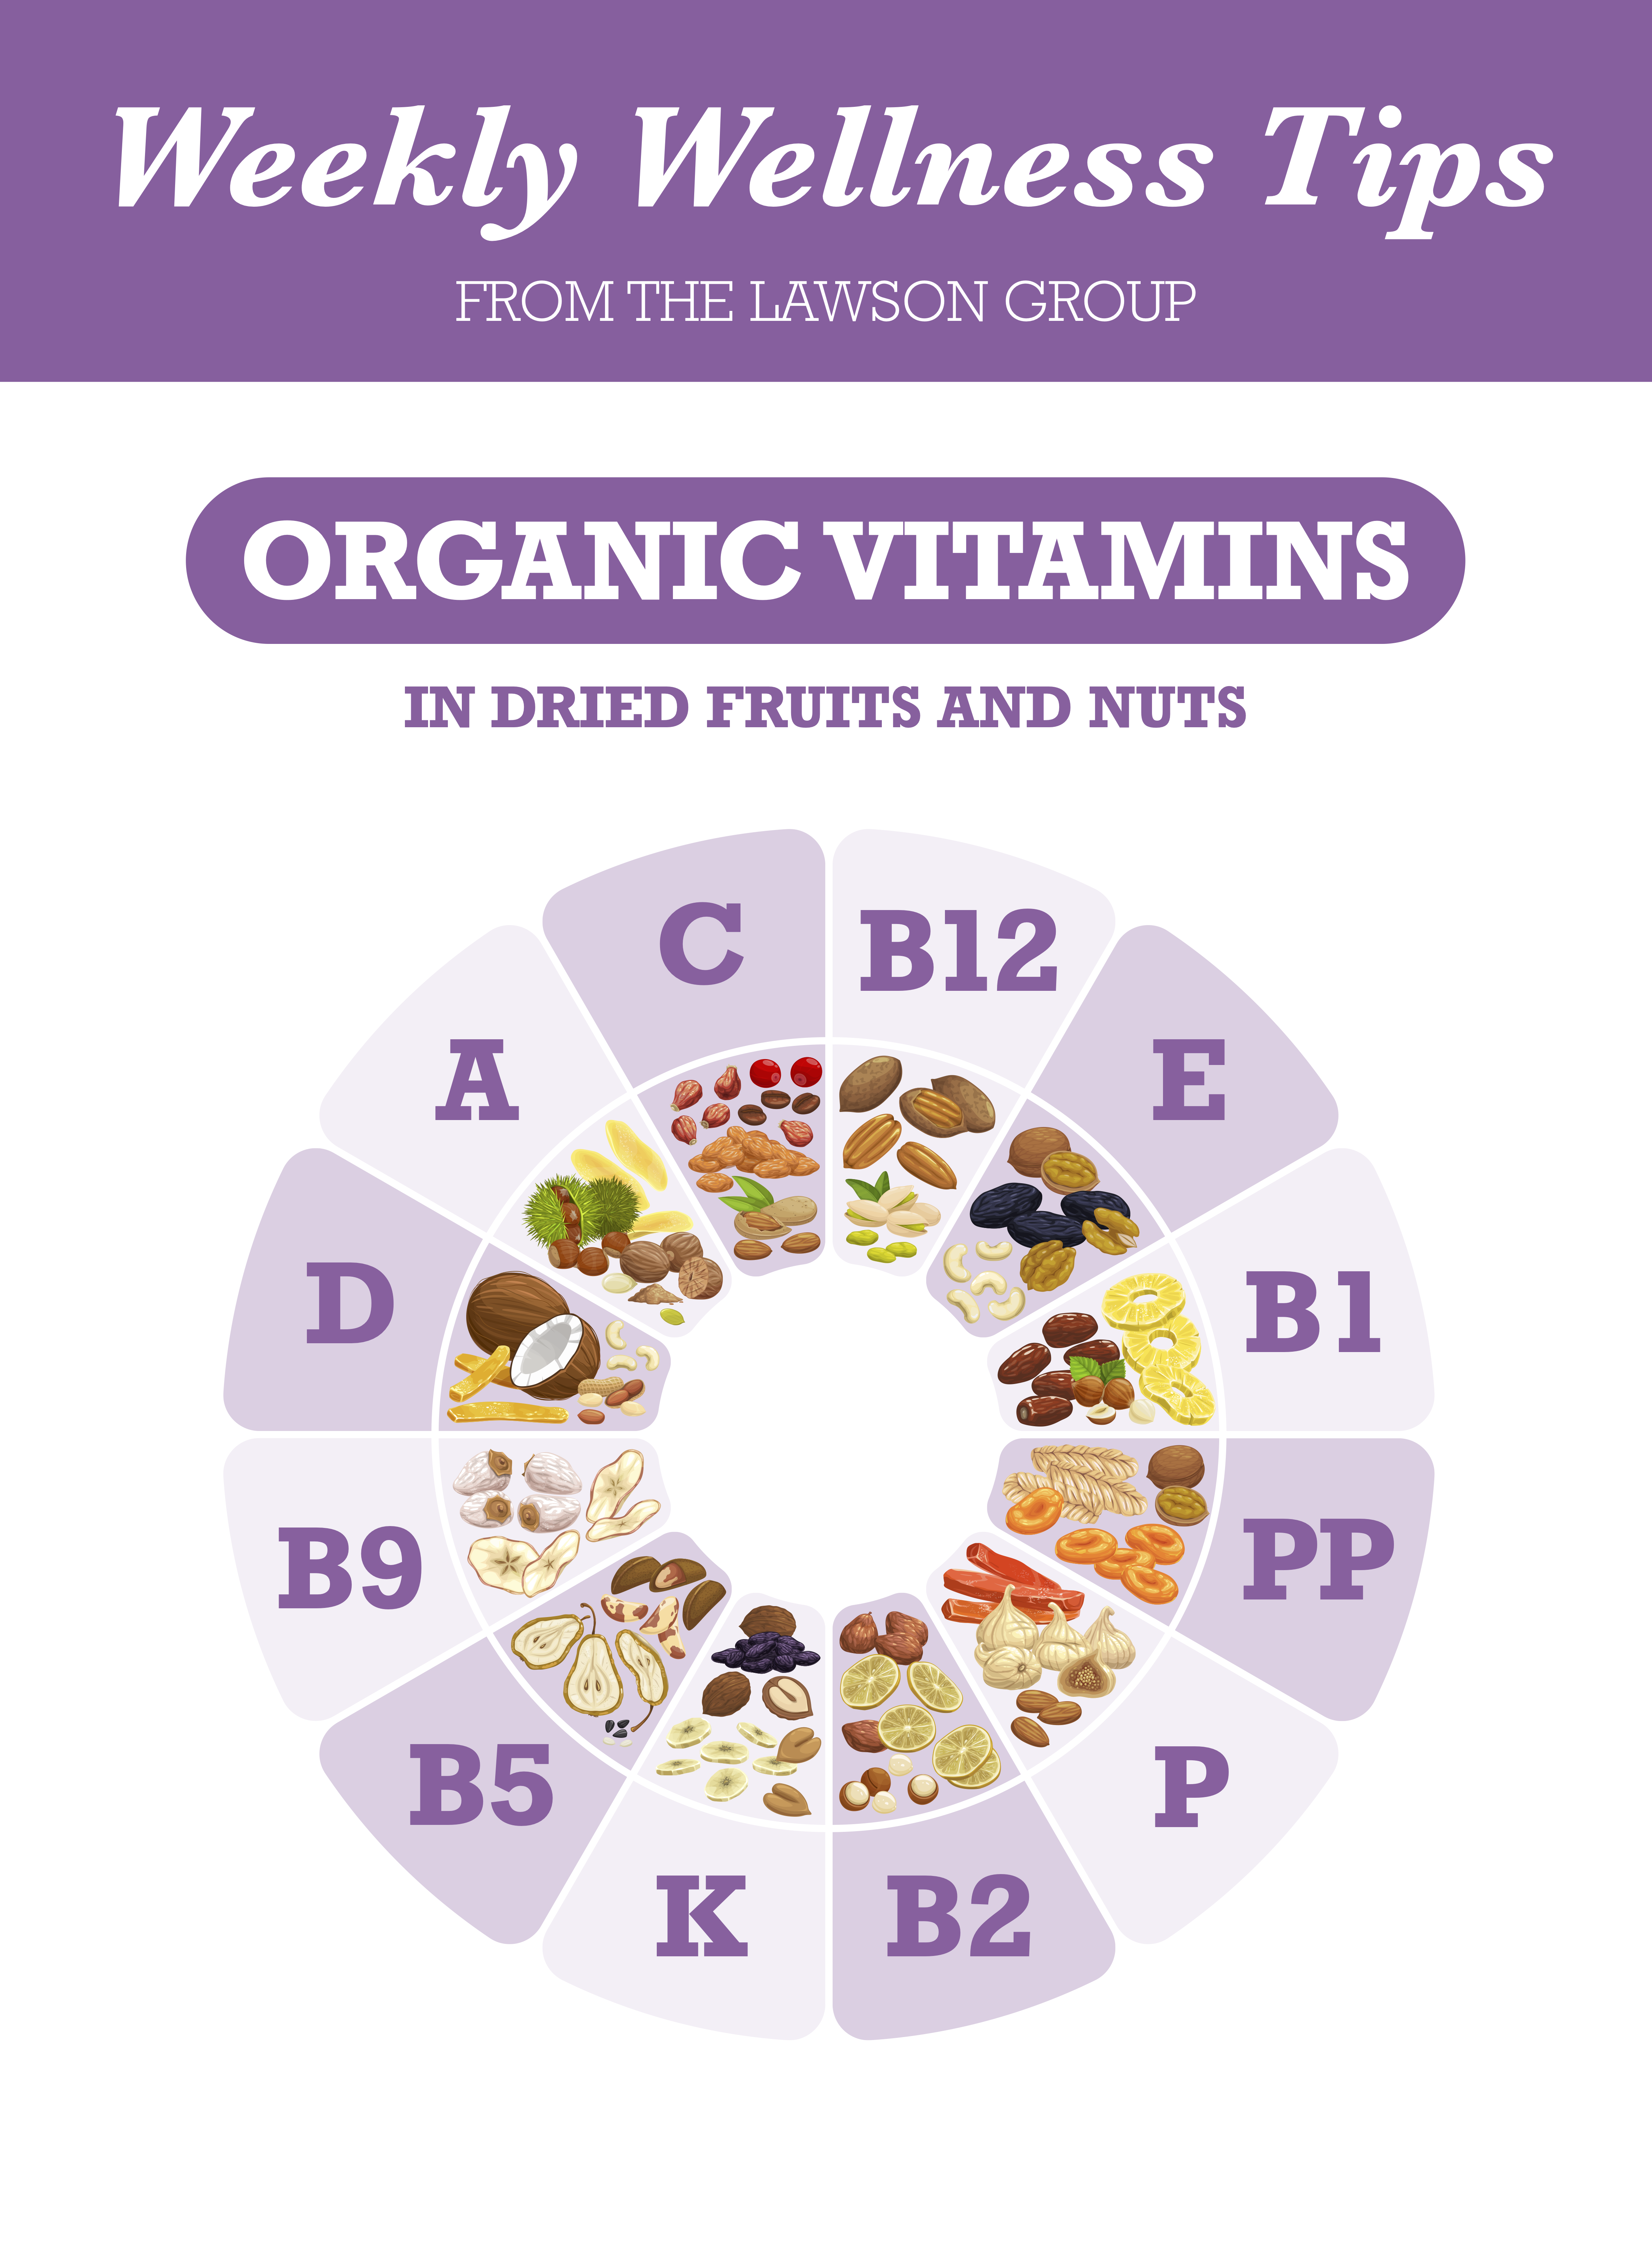 TLG22005 Wellness Tips Organic Vitamins Infographic-1080px-01 copy